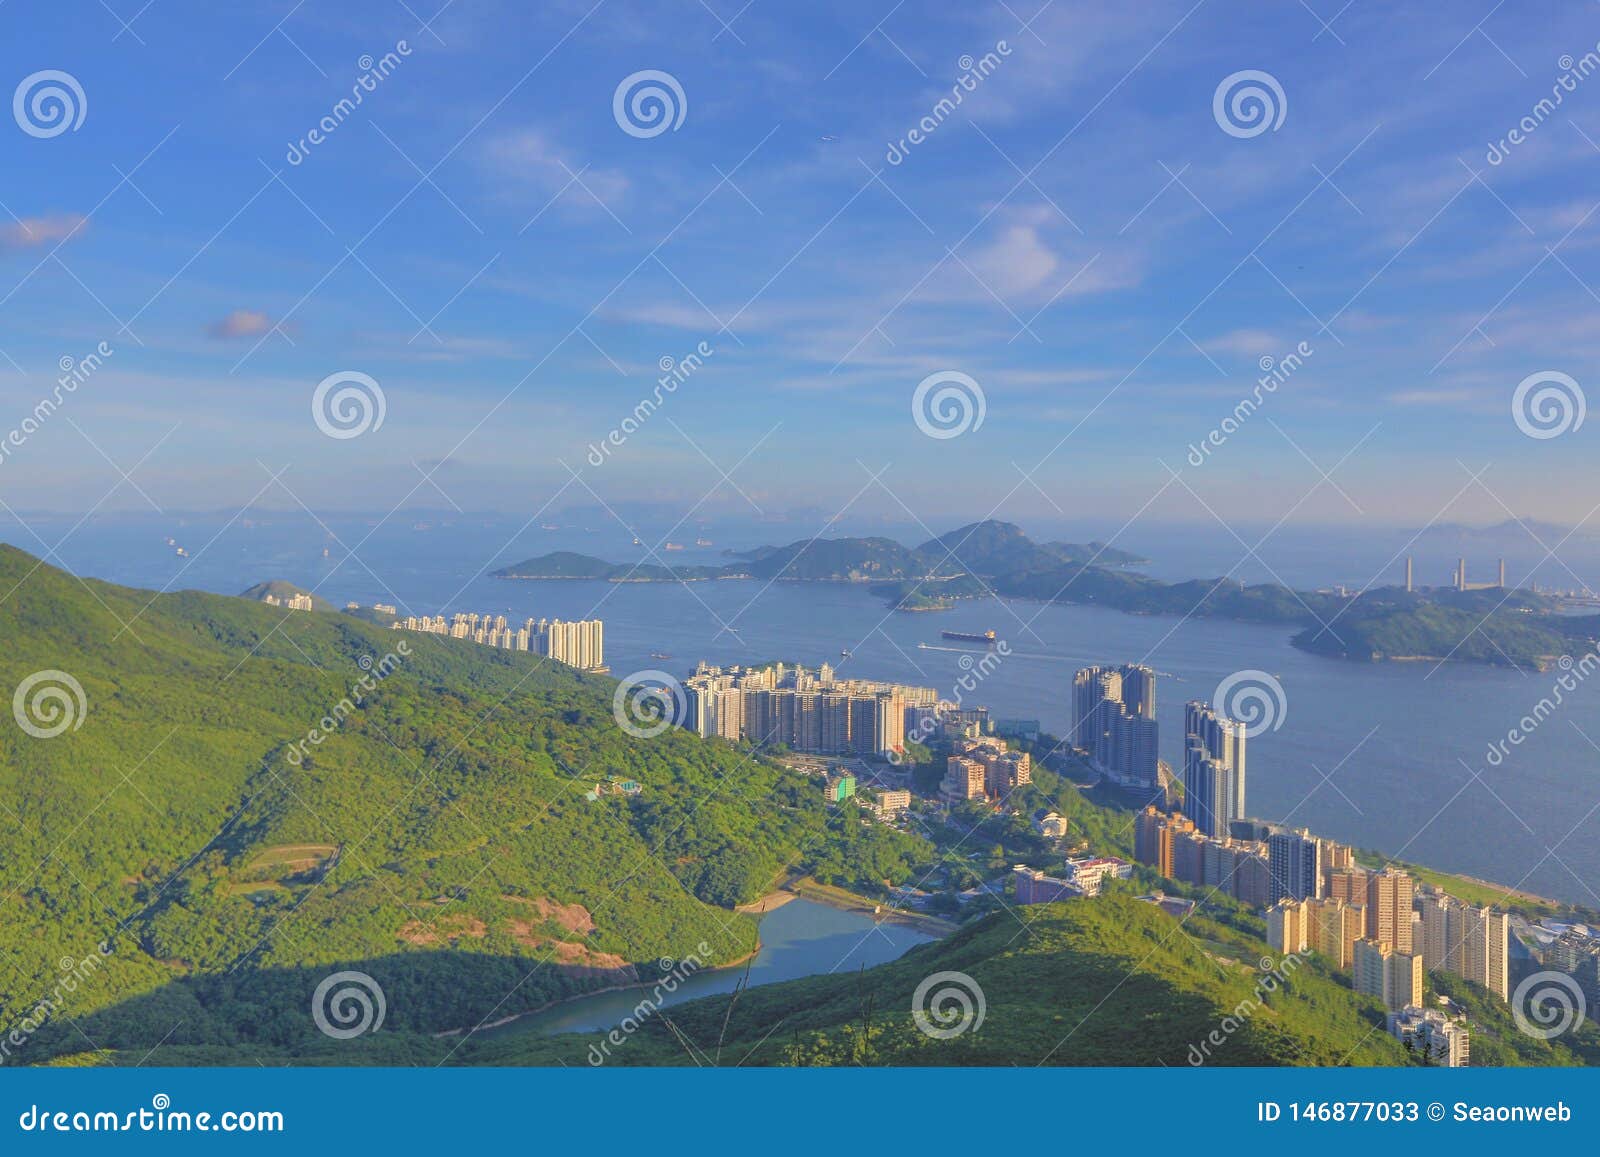 Cyberport在香港海岛钢线湾. 钢线湾香港cyberport在香港海岛